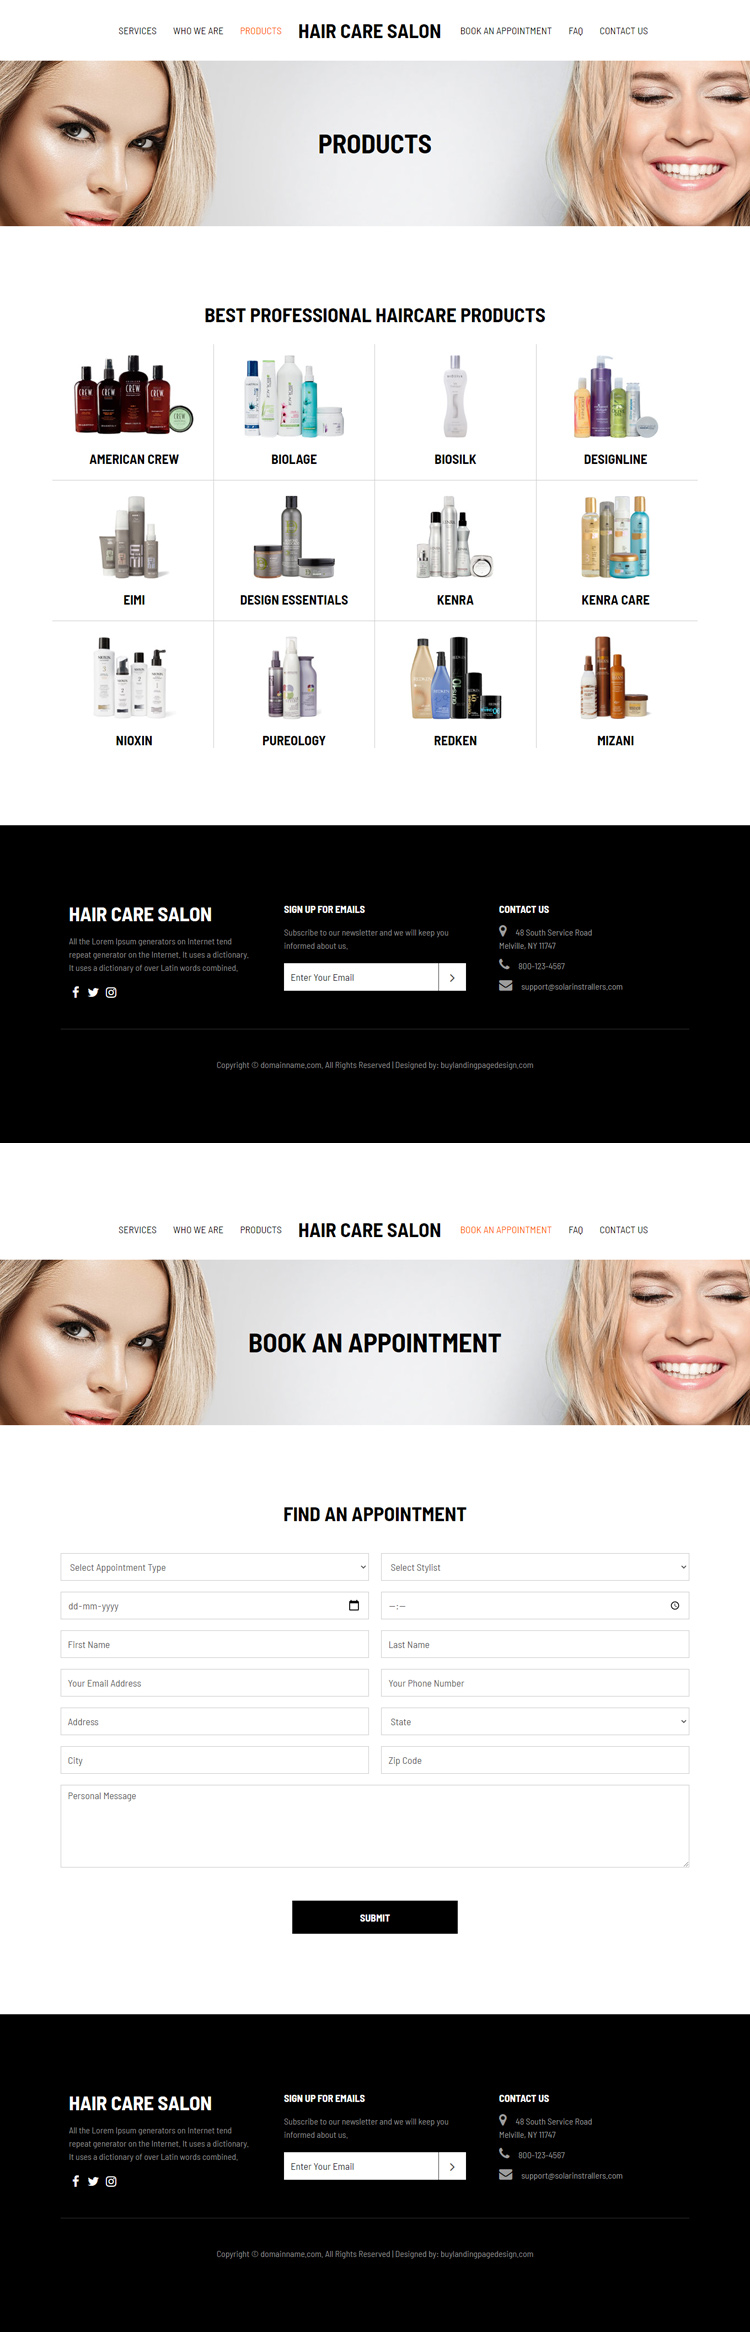 hair care salon responsive website design